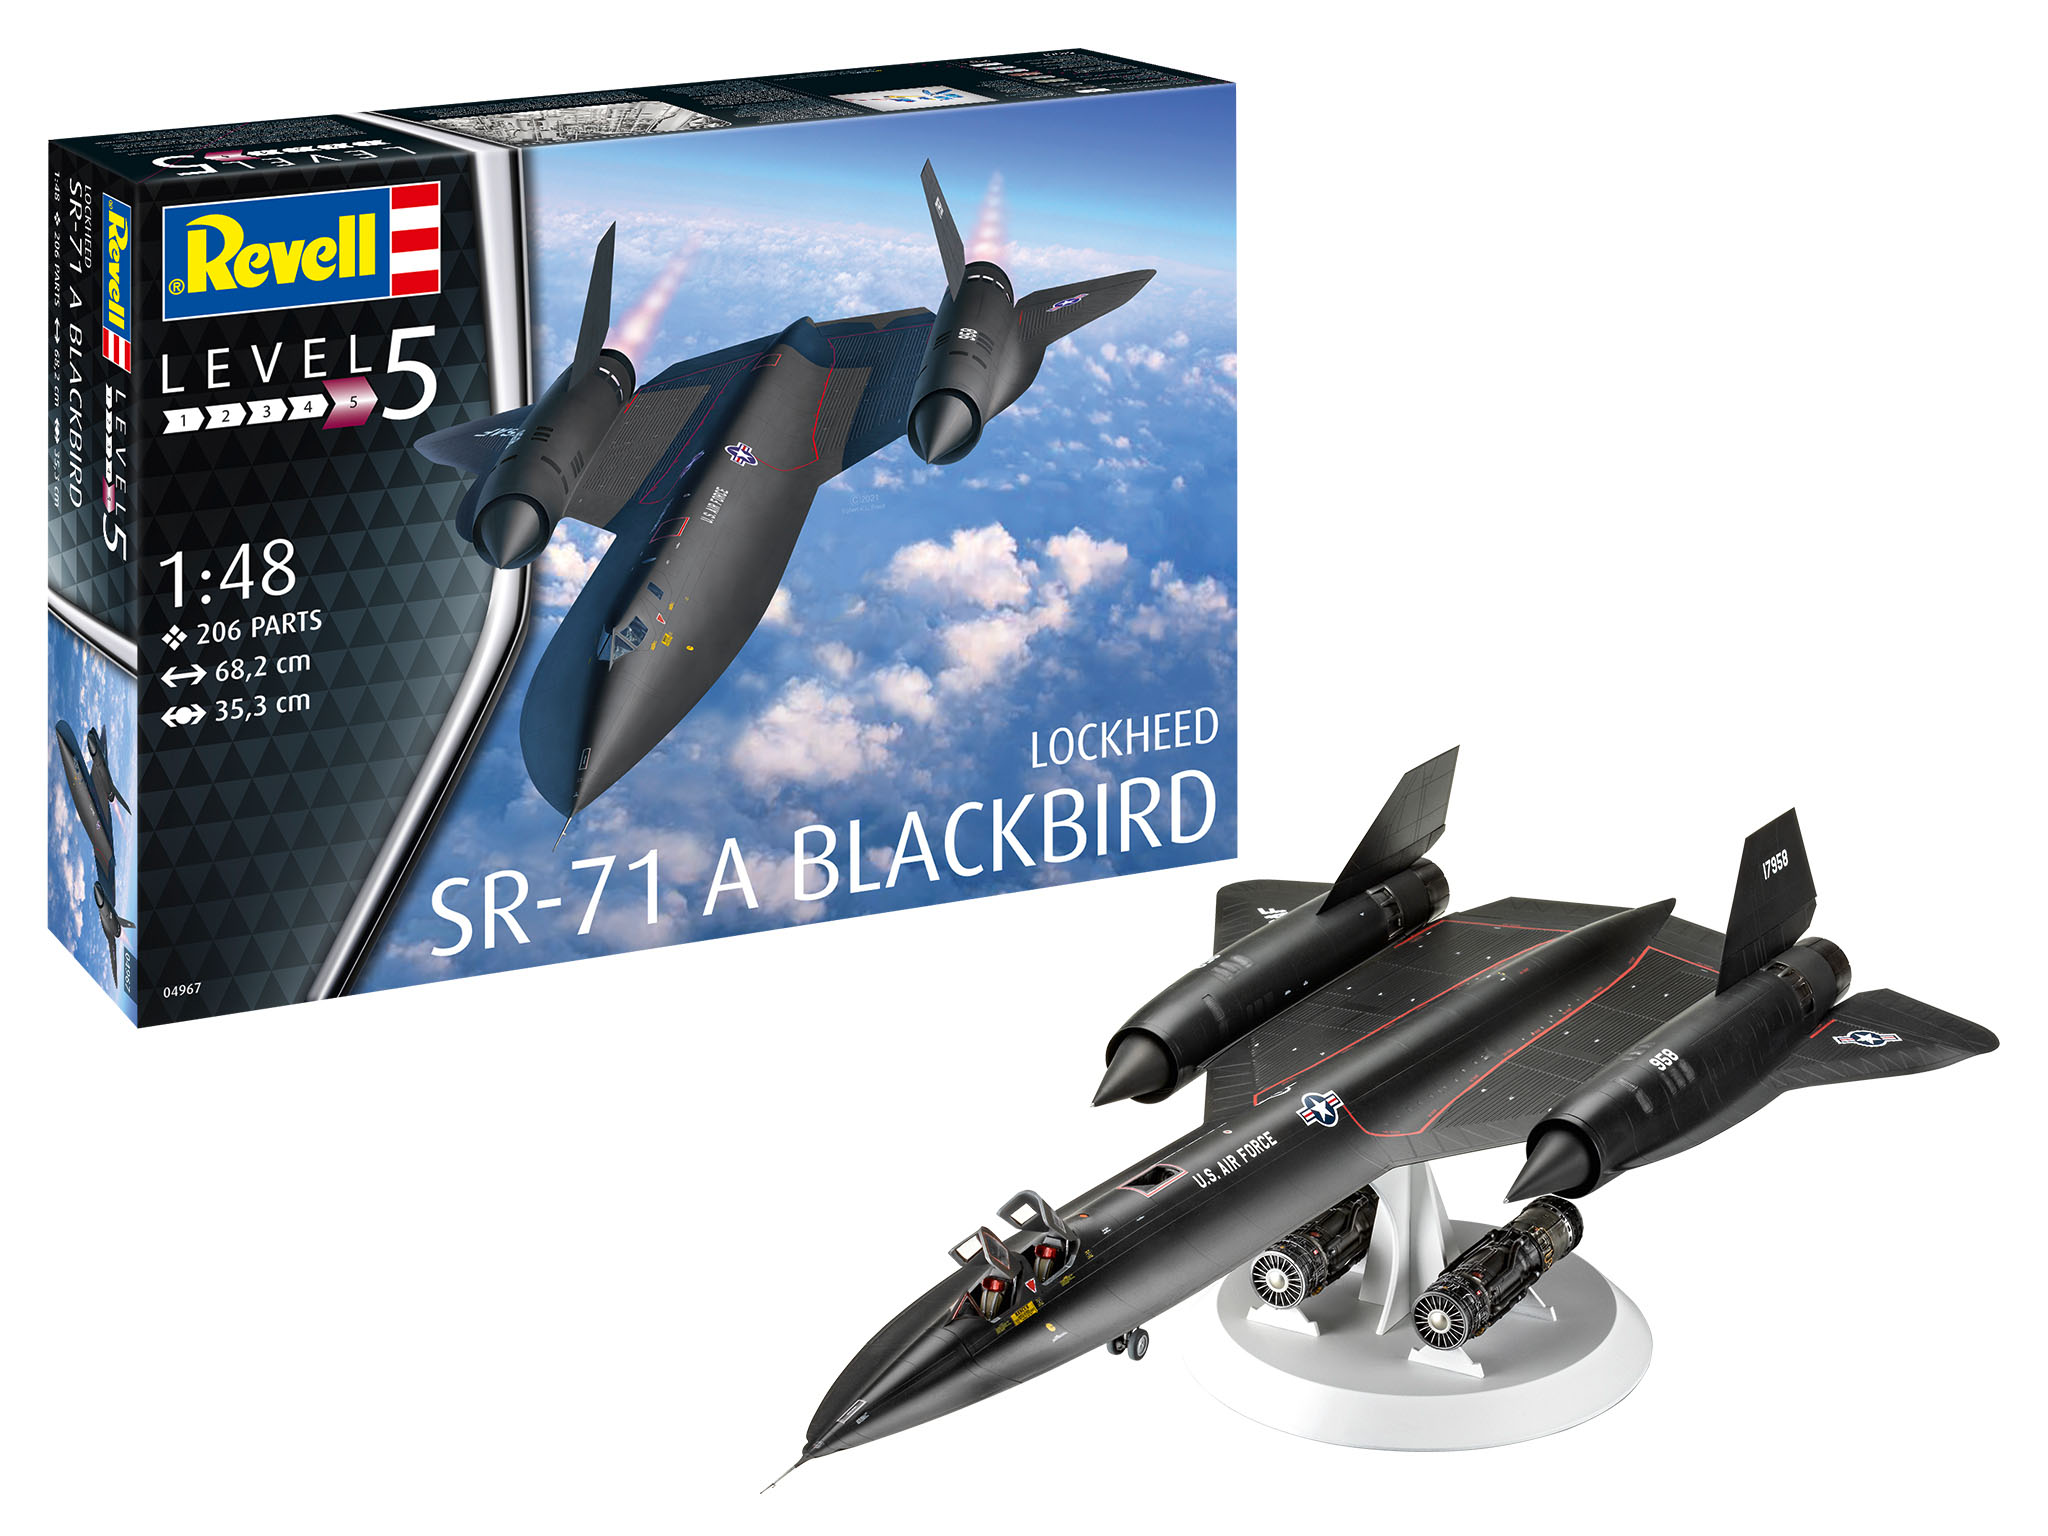 Lockheed SR-71 Blackbird - 04967